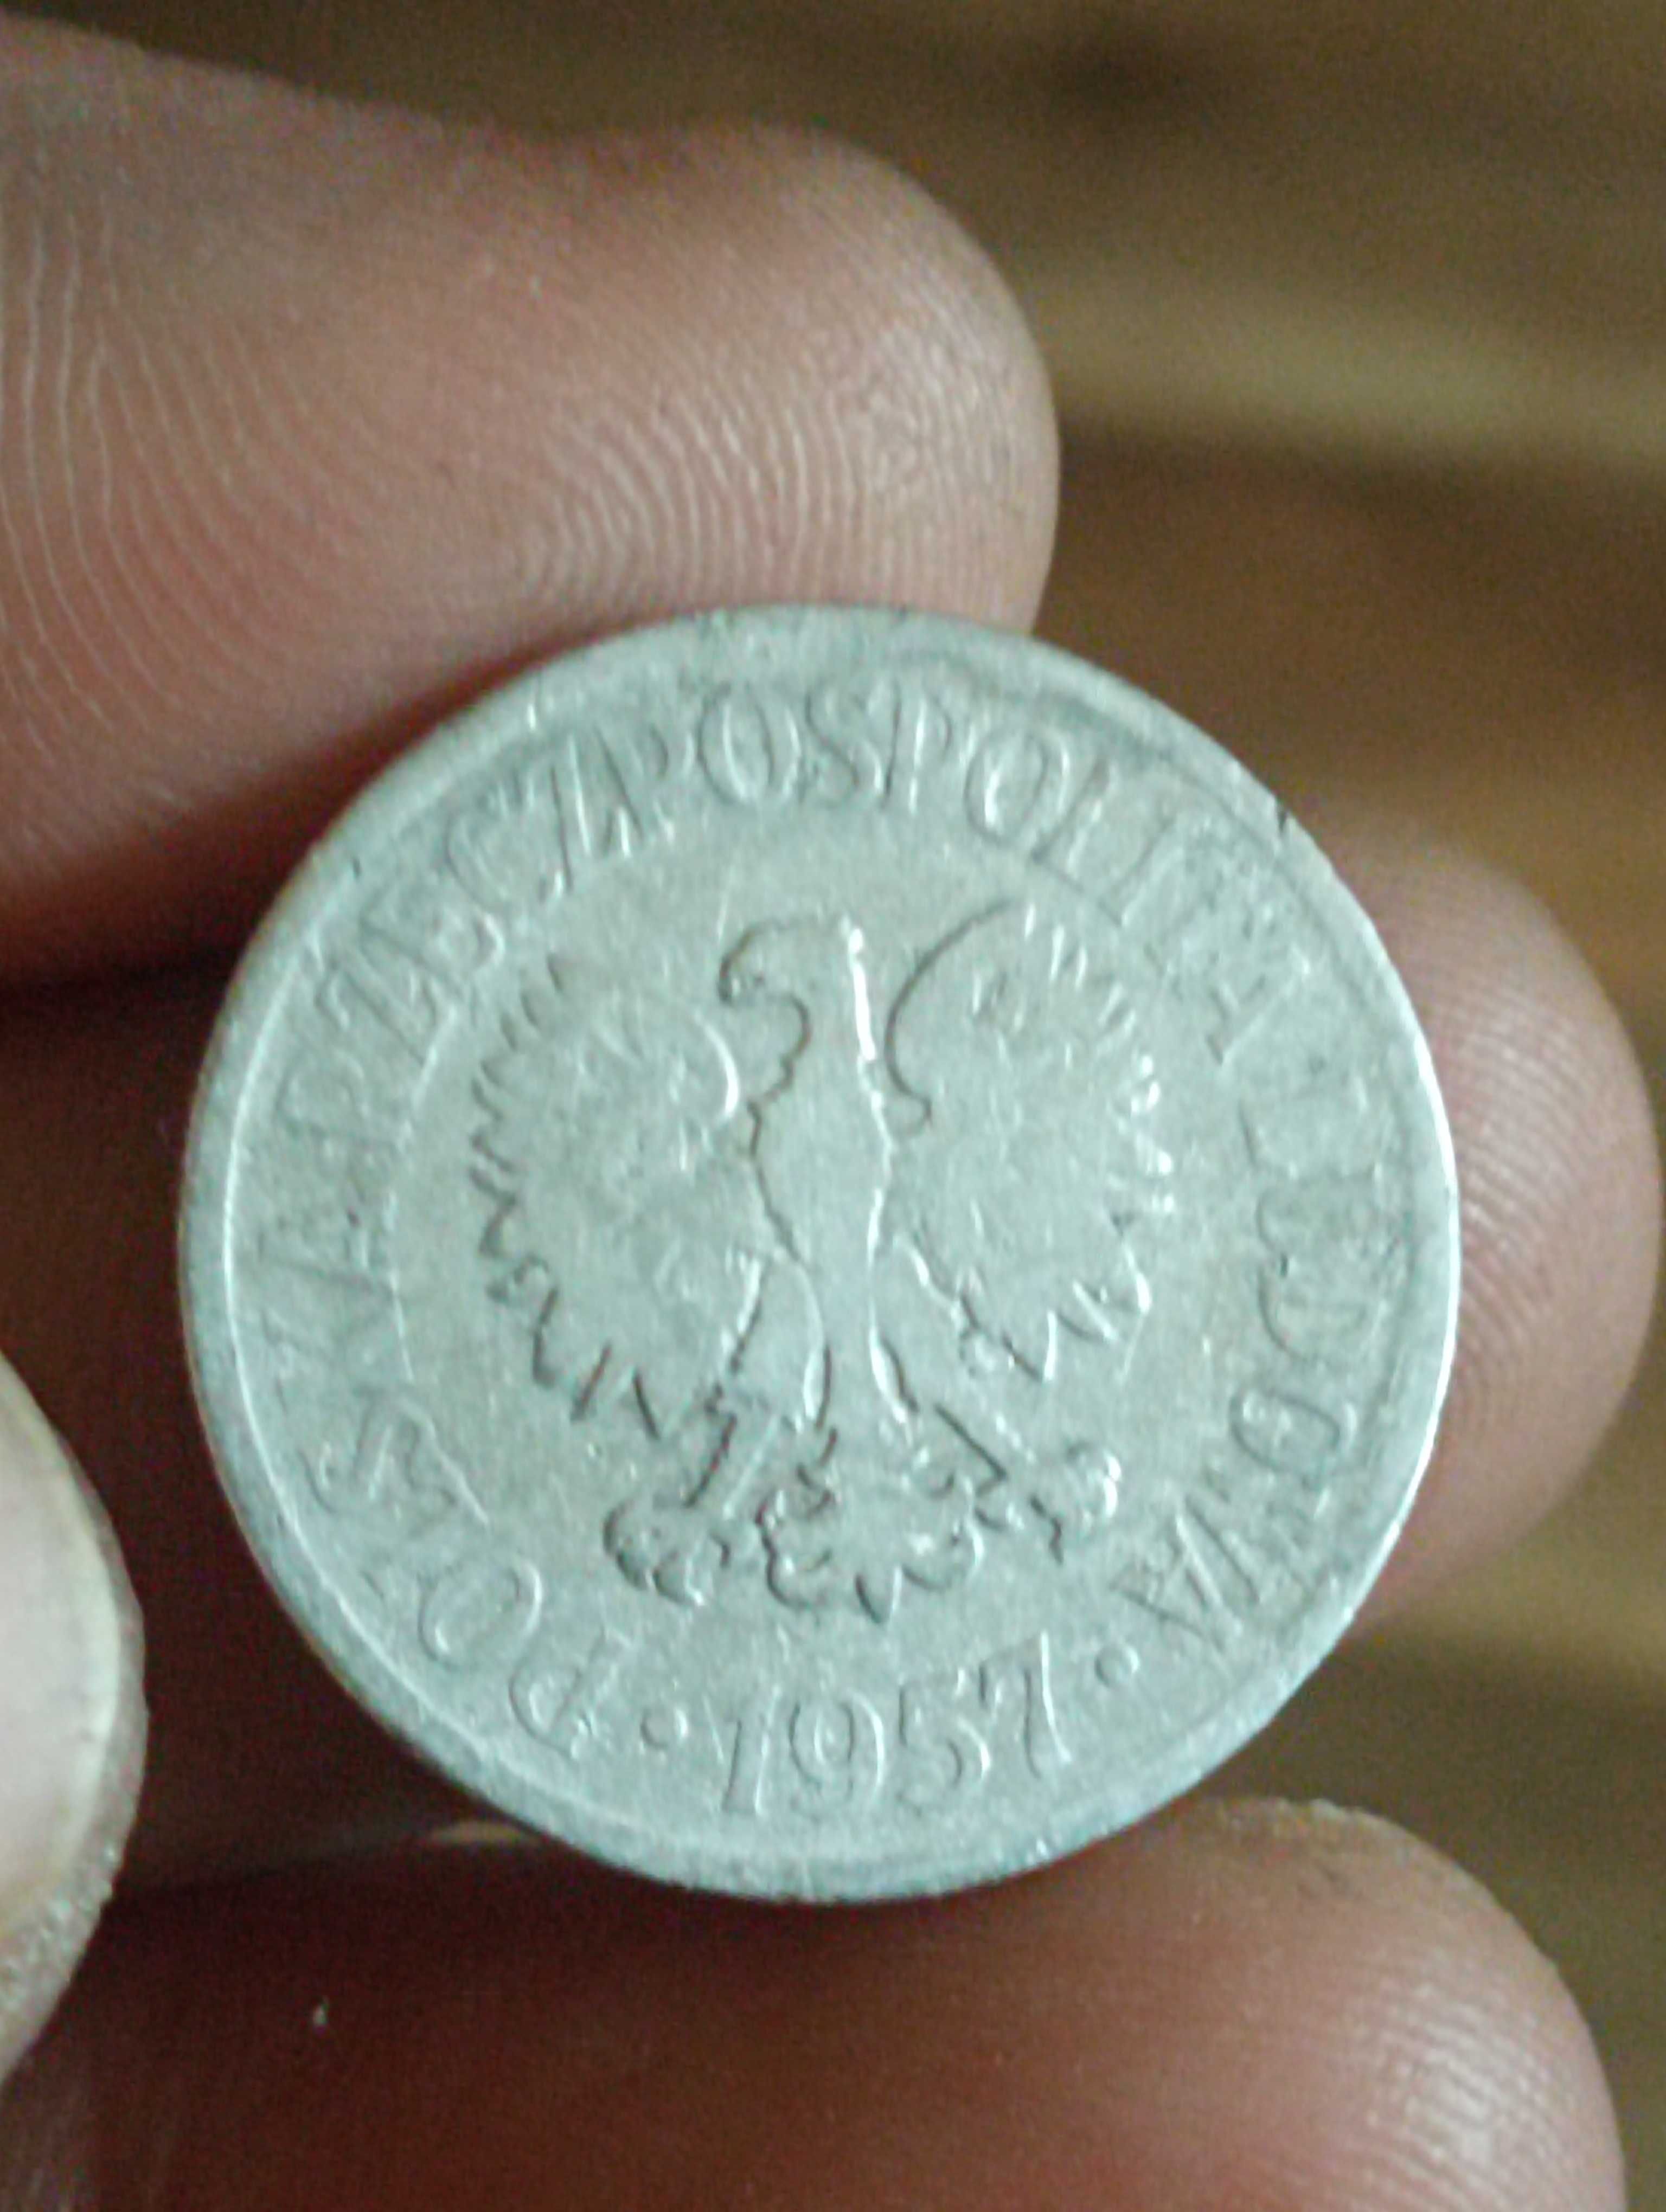 Moneta drugie 50 groszy 1957 rok